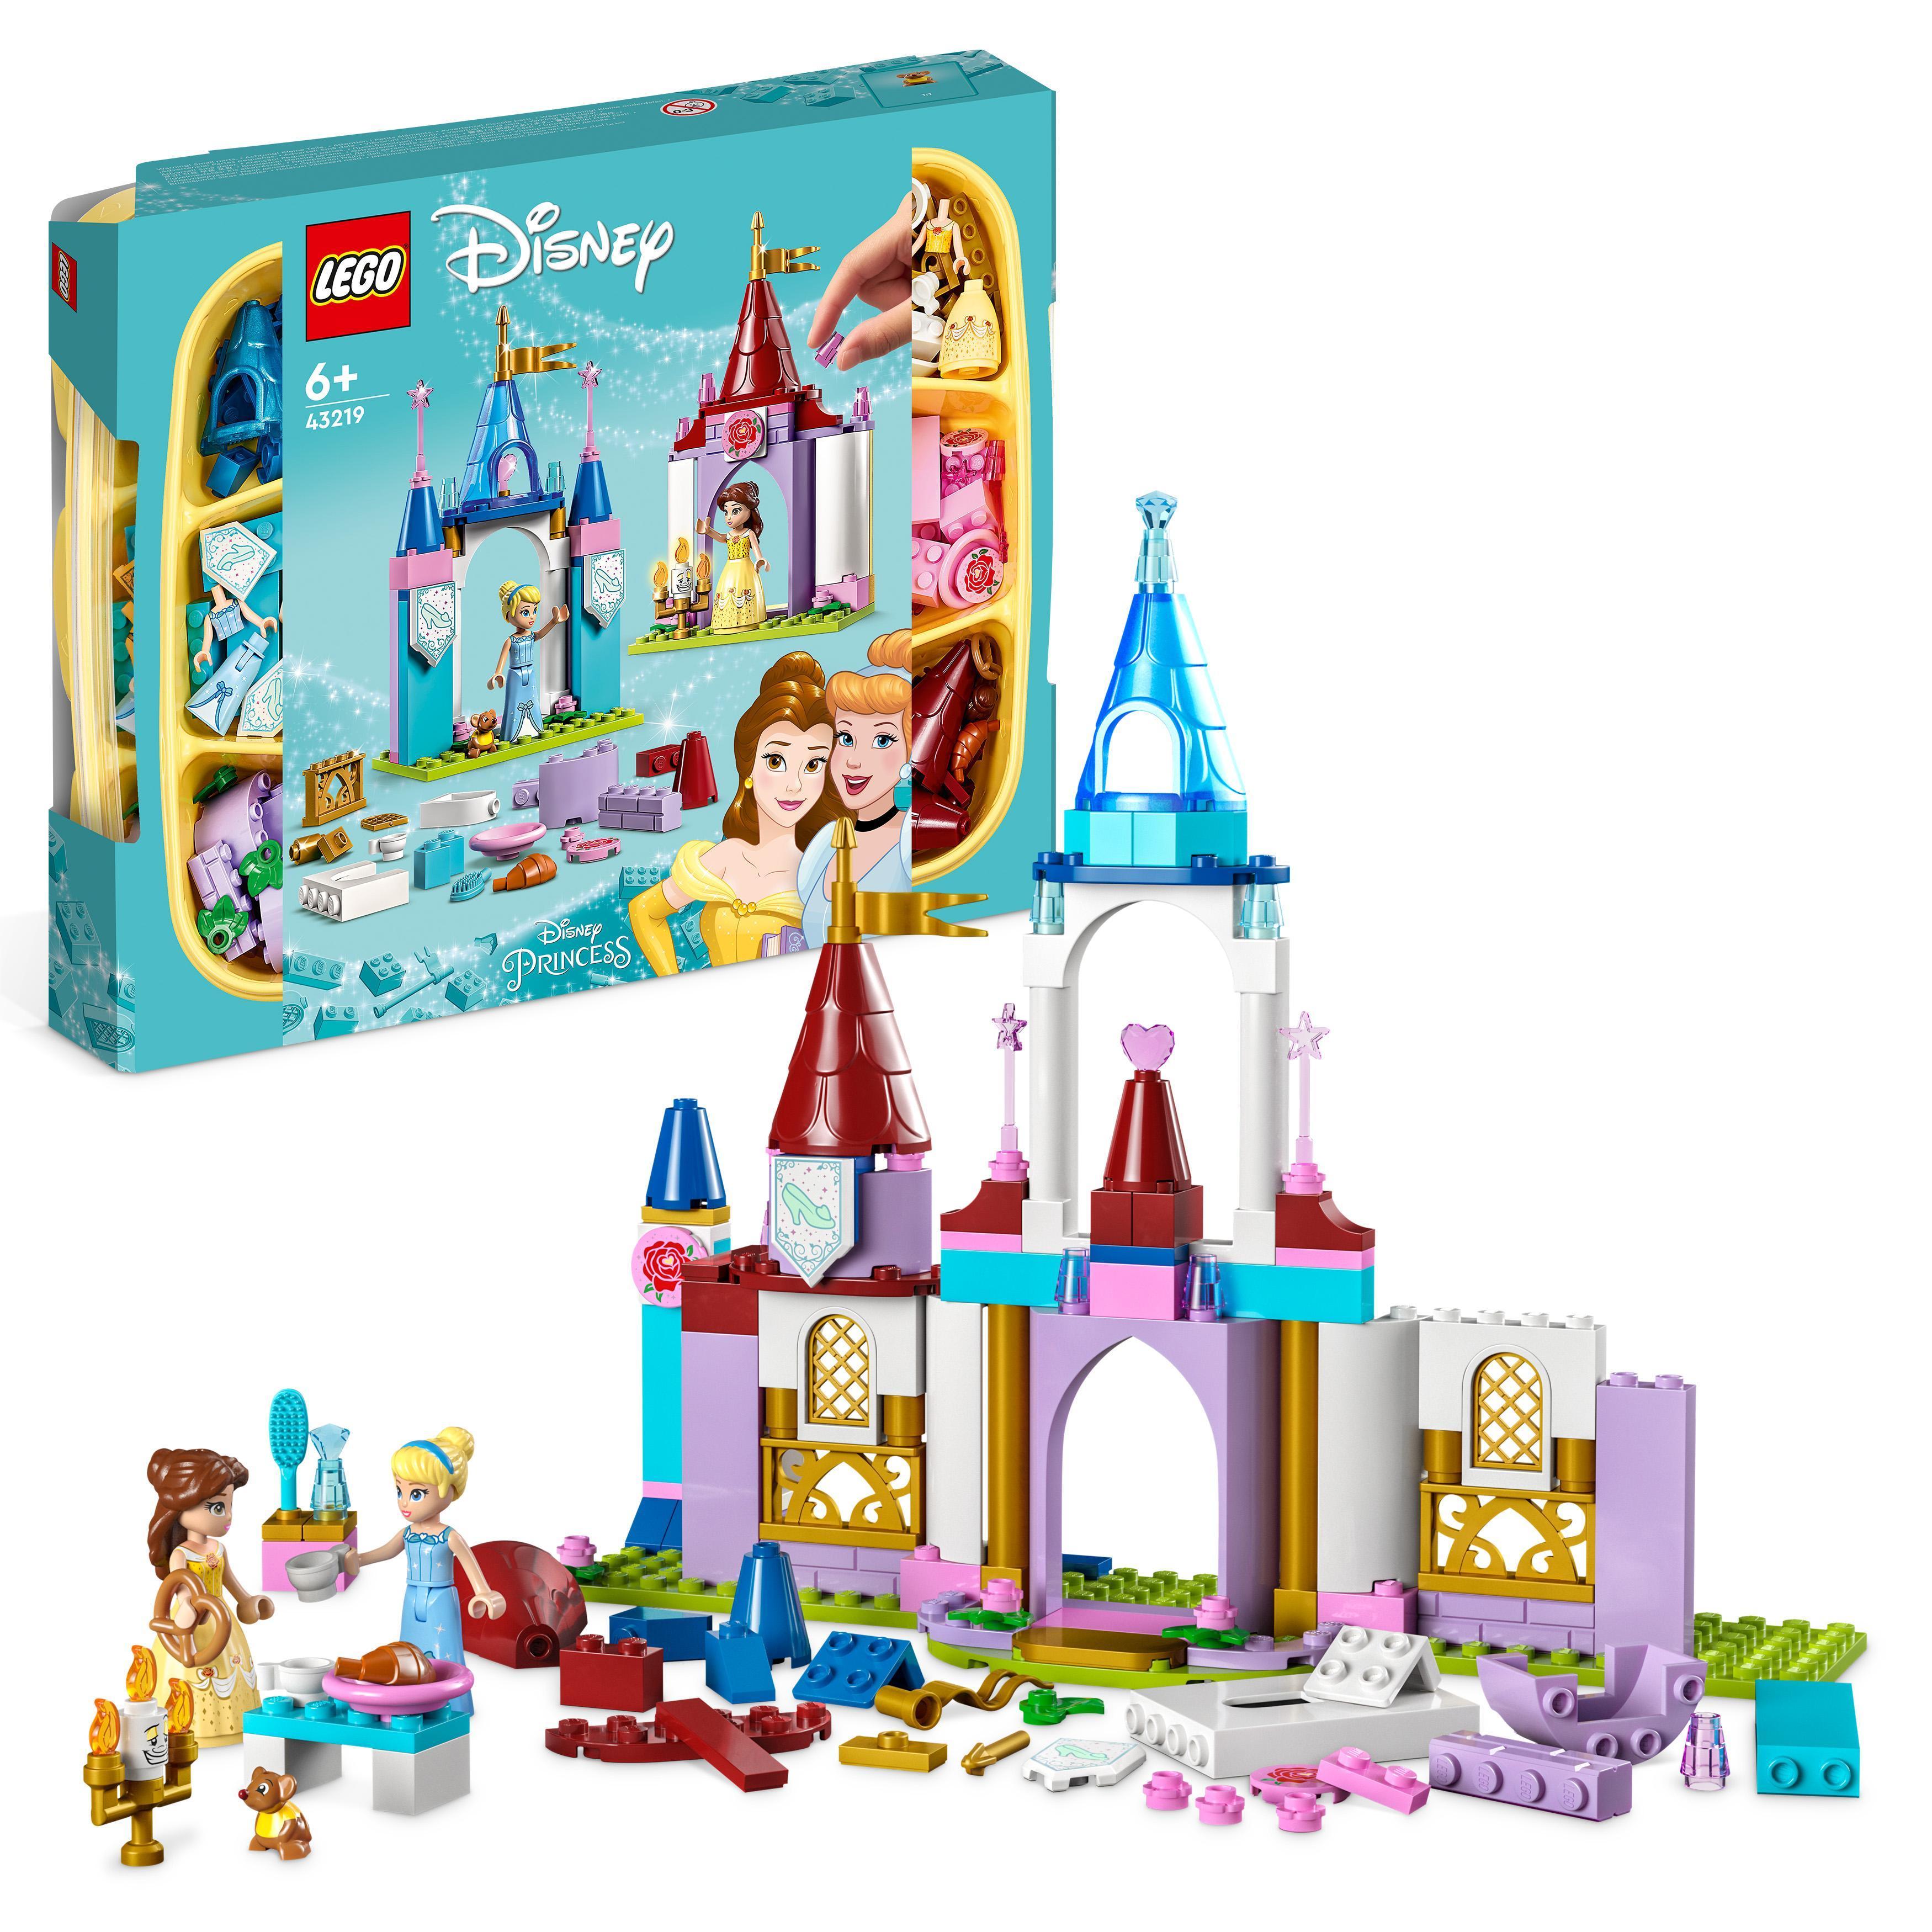 LEGO Disney Princess - Kreative Disney Princess-slotte (43219) - Leker